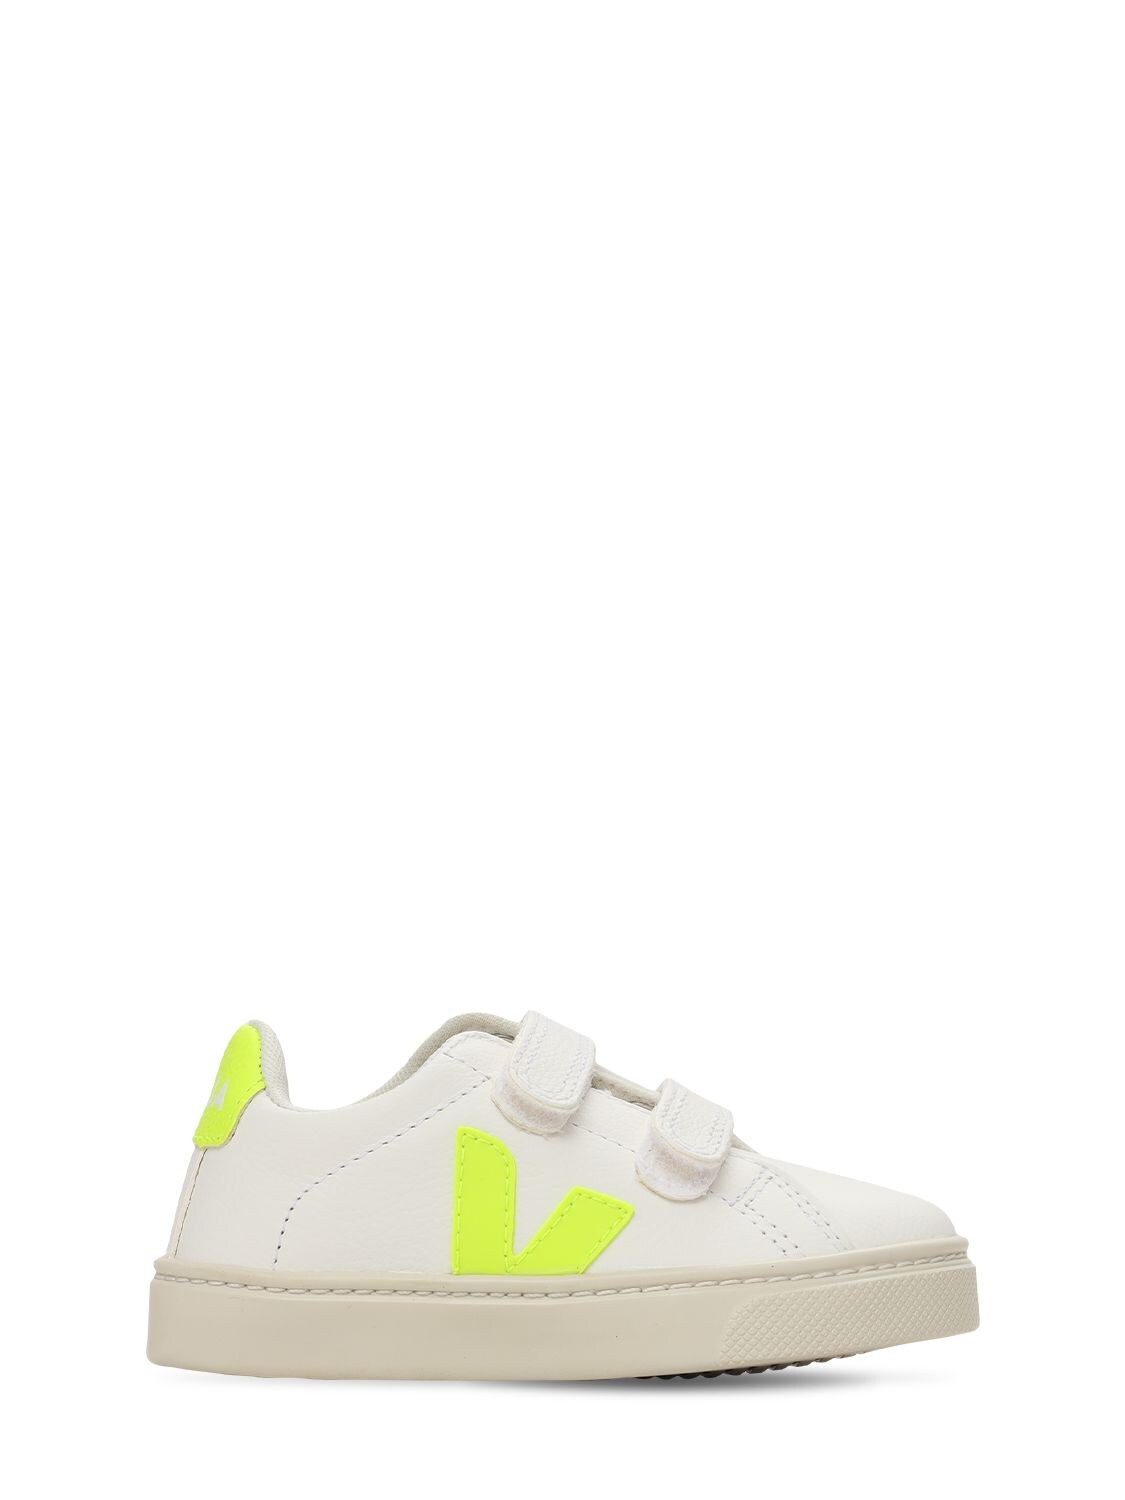 Veja Kids Sneakers Small Esplar For For Boys And For Girls In White